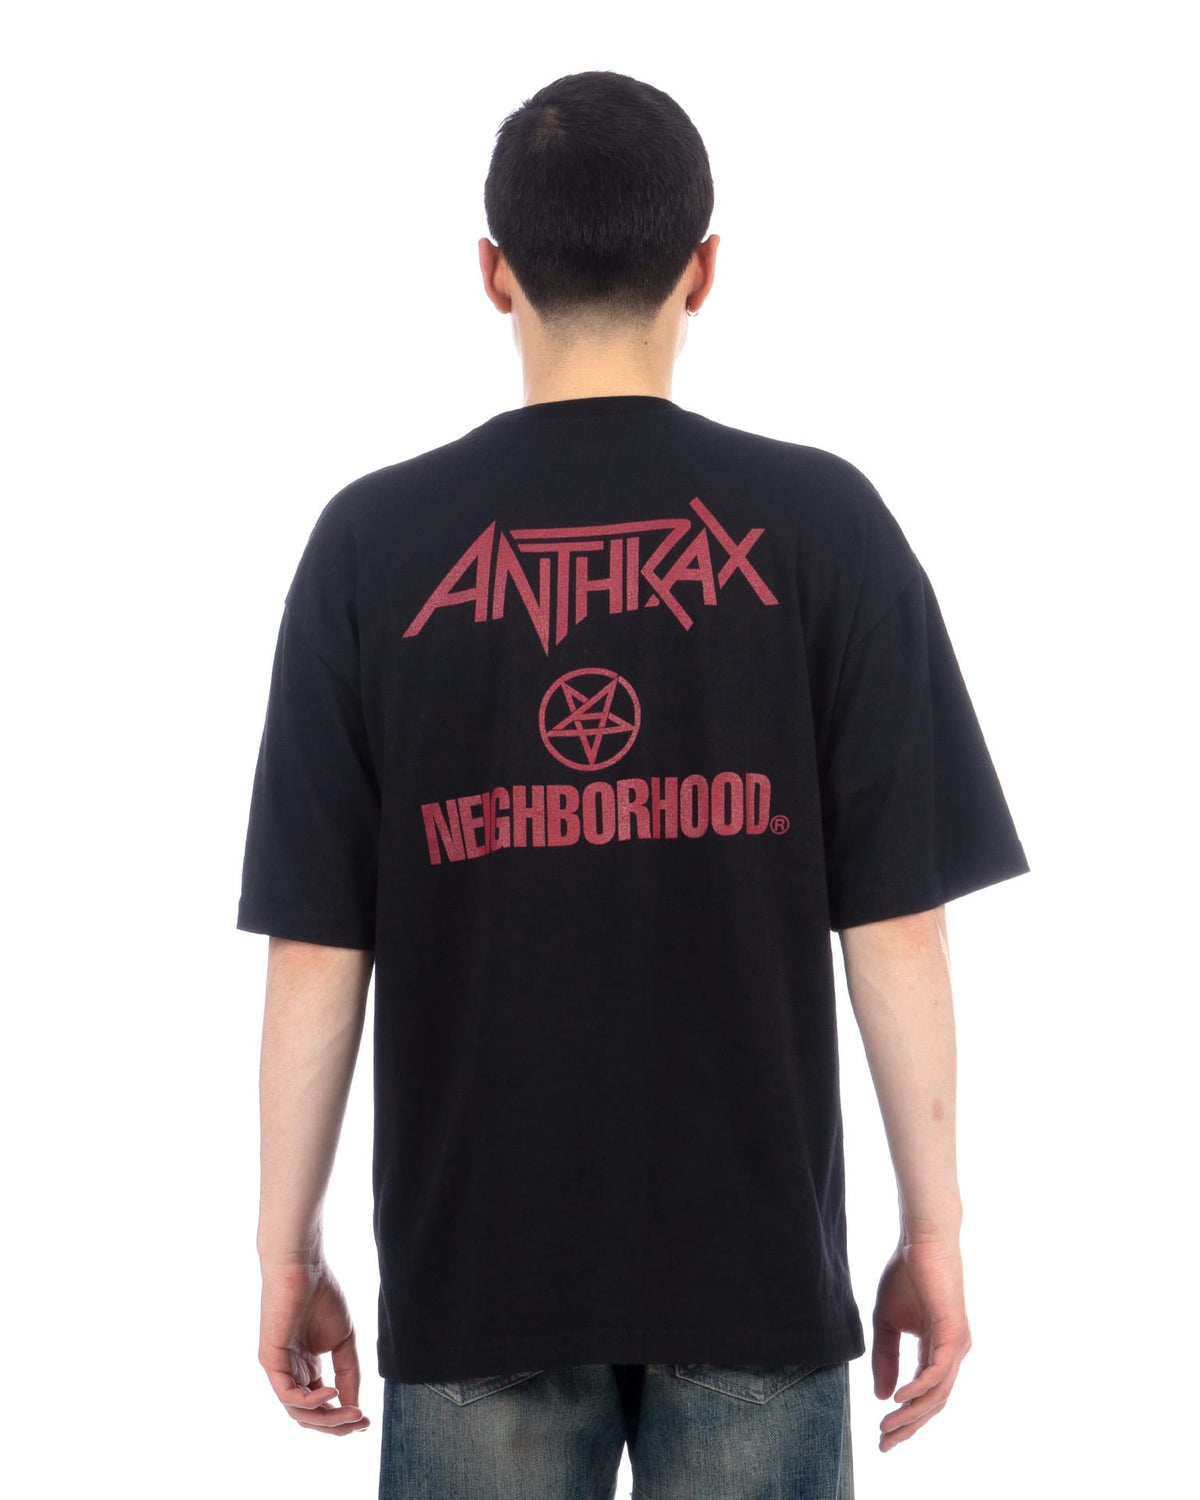 NEIGHBORHOOD | x ANTHRAX T-Shirt 